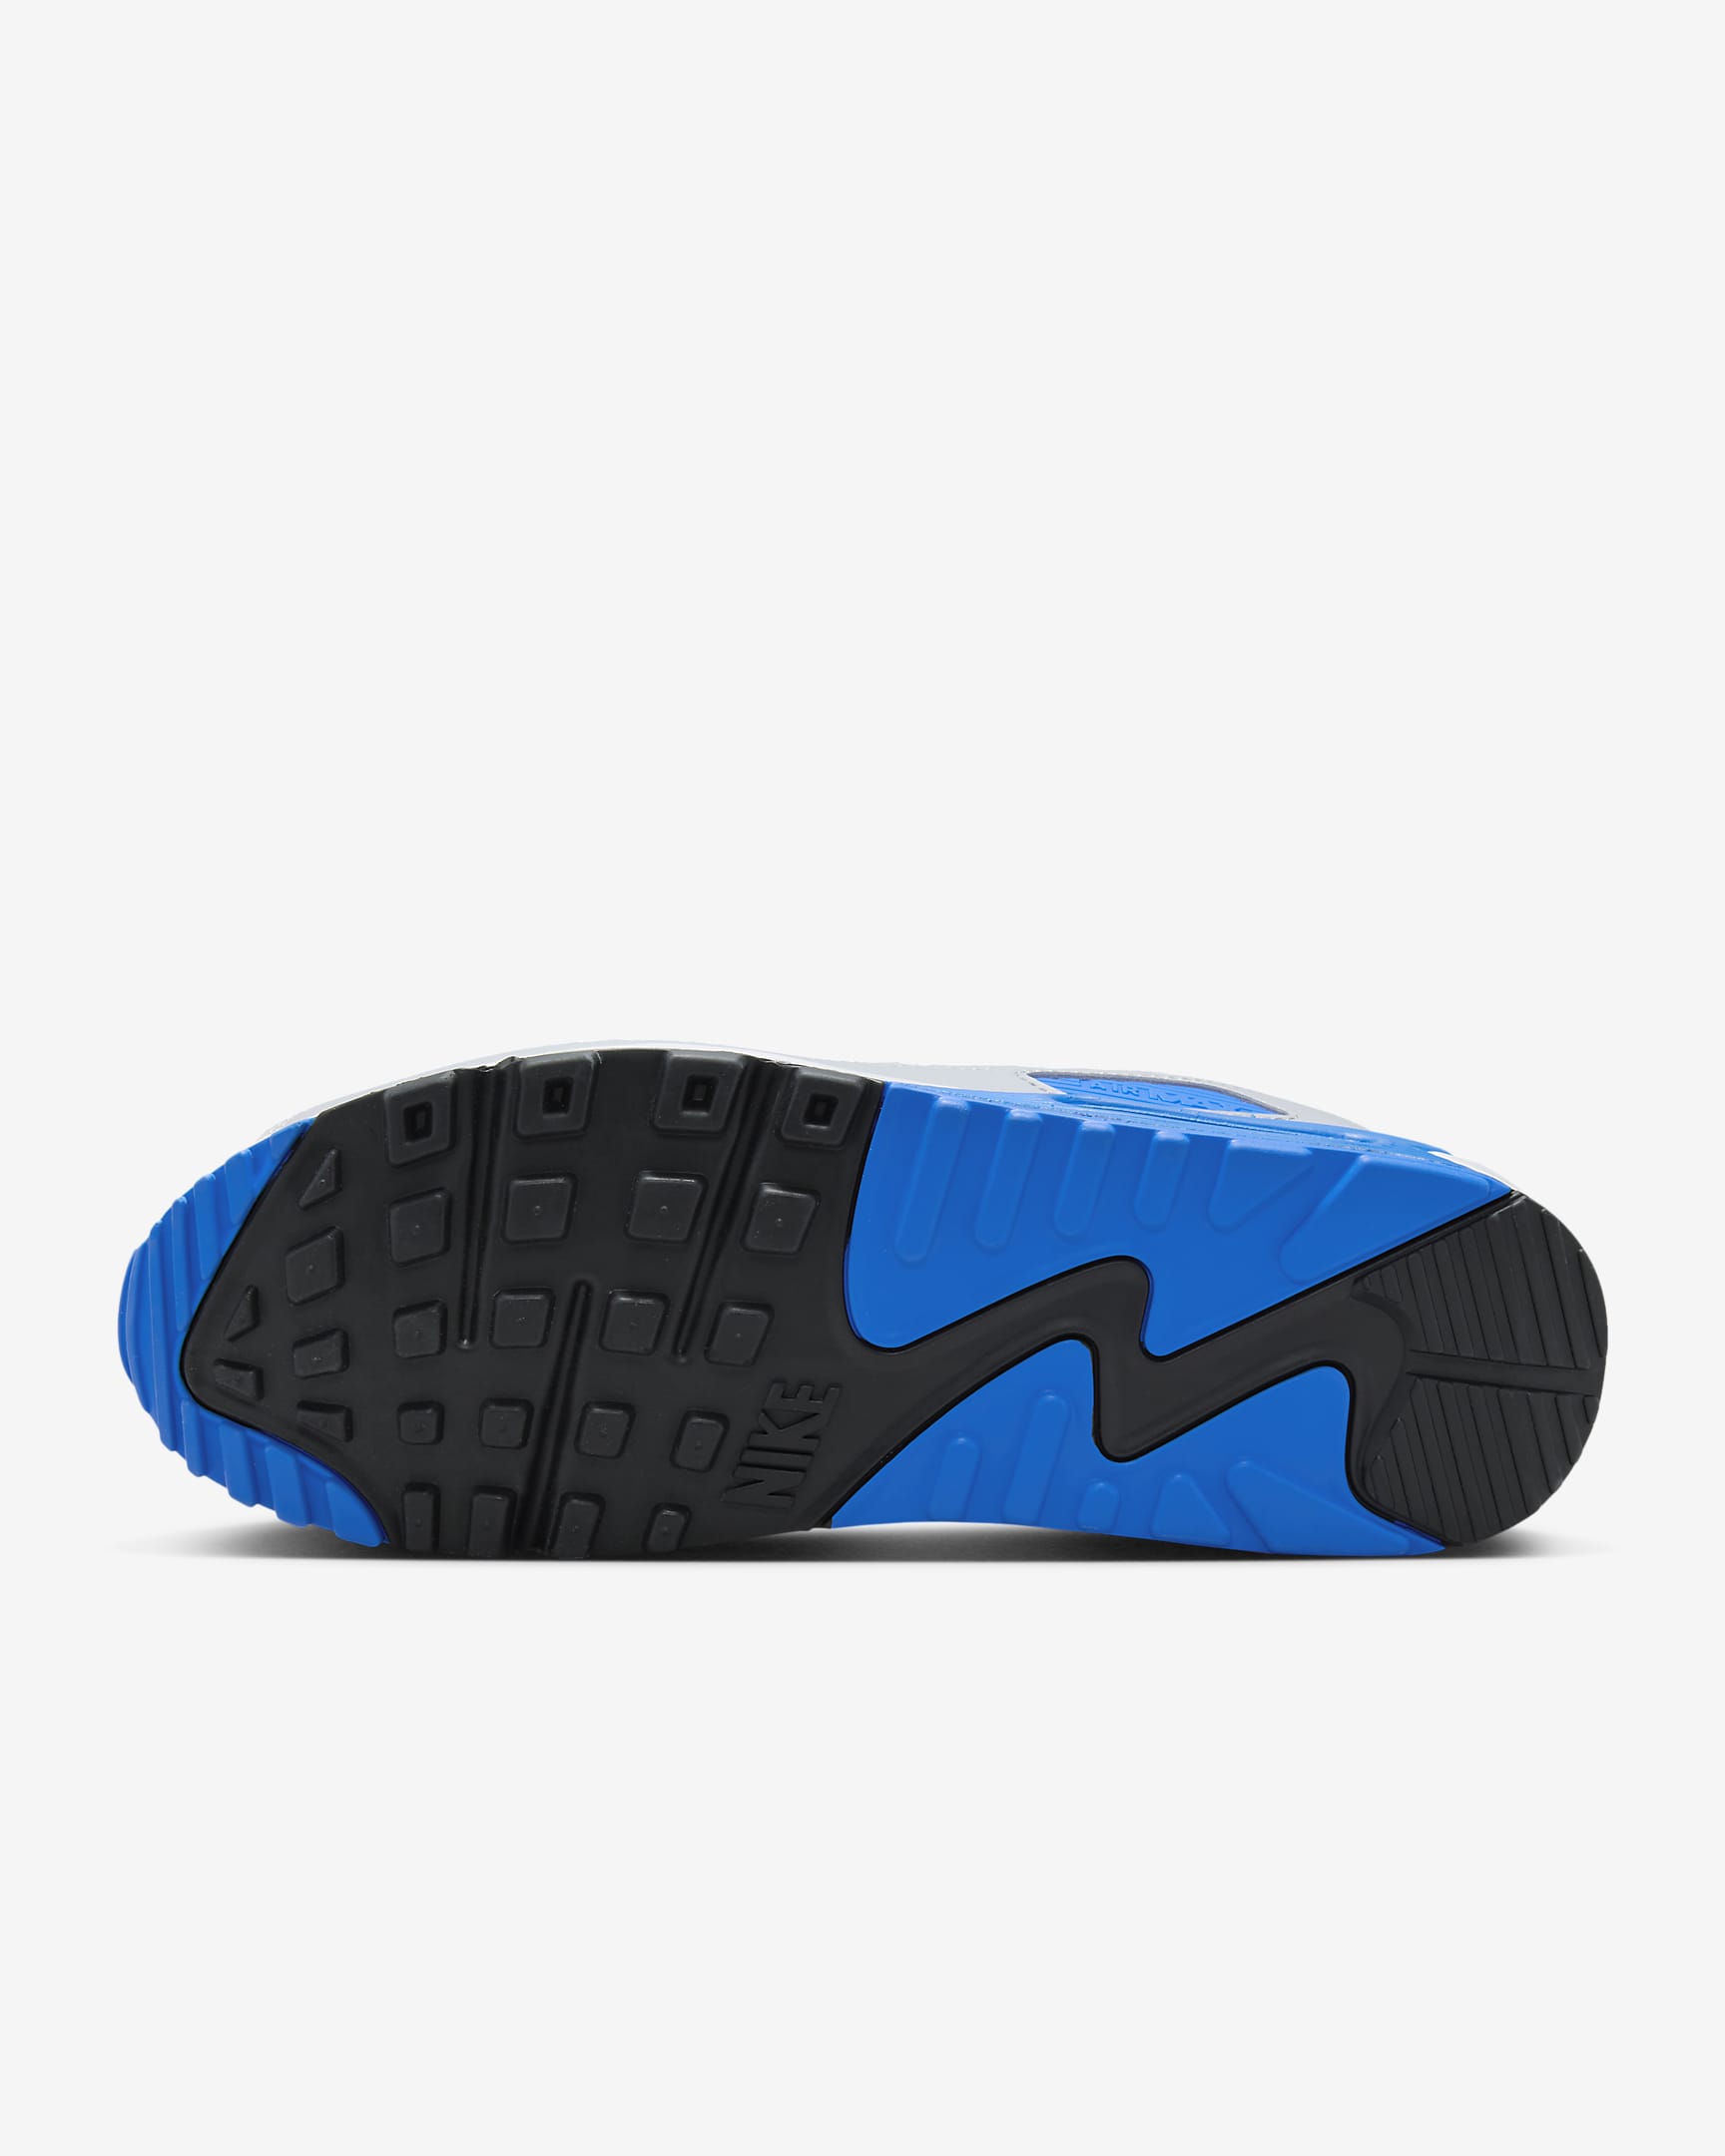 Nike Air Max 90 Men's Shoes - White/Photo Blue/Pure Platinum/Black